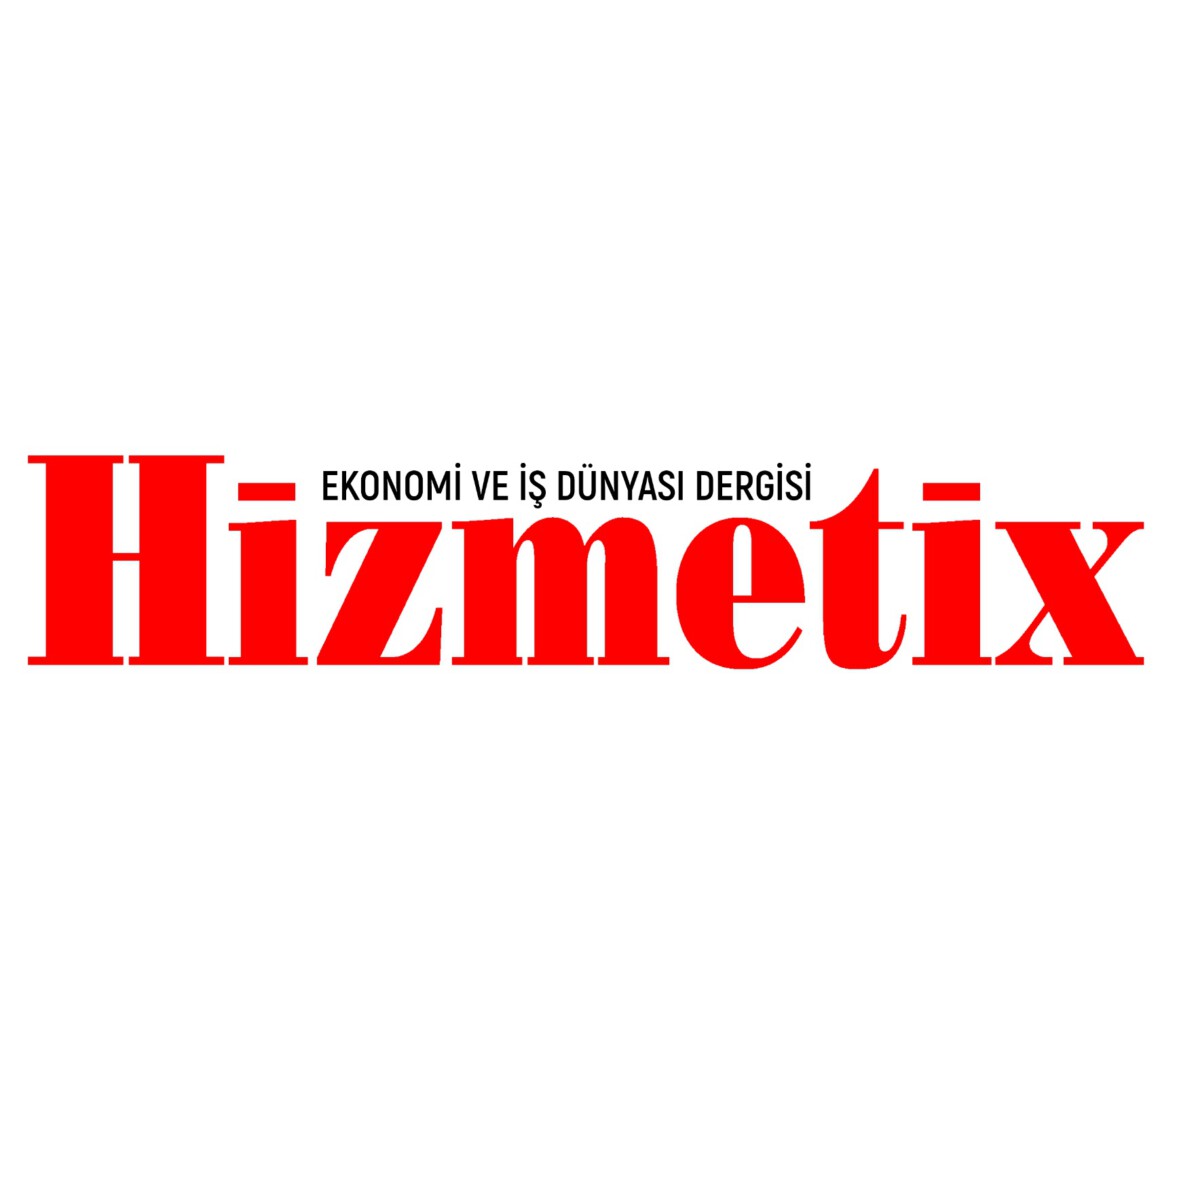 Hizmetix